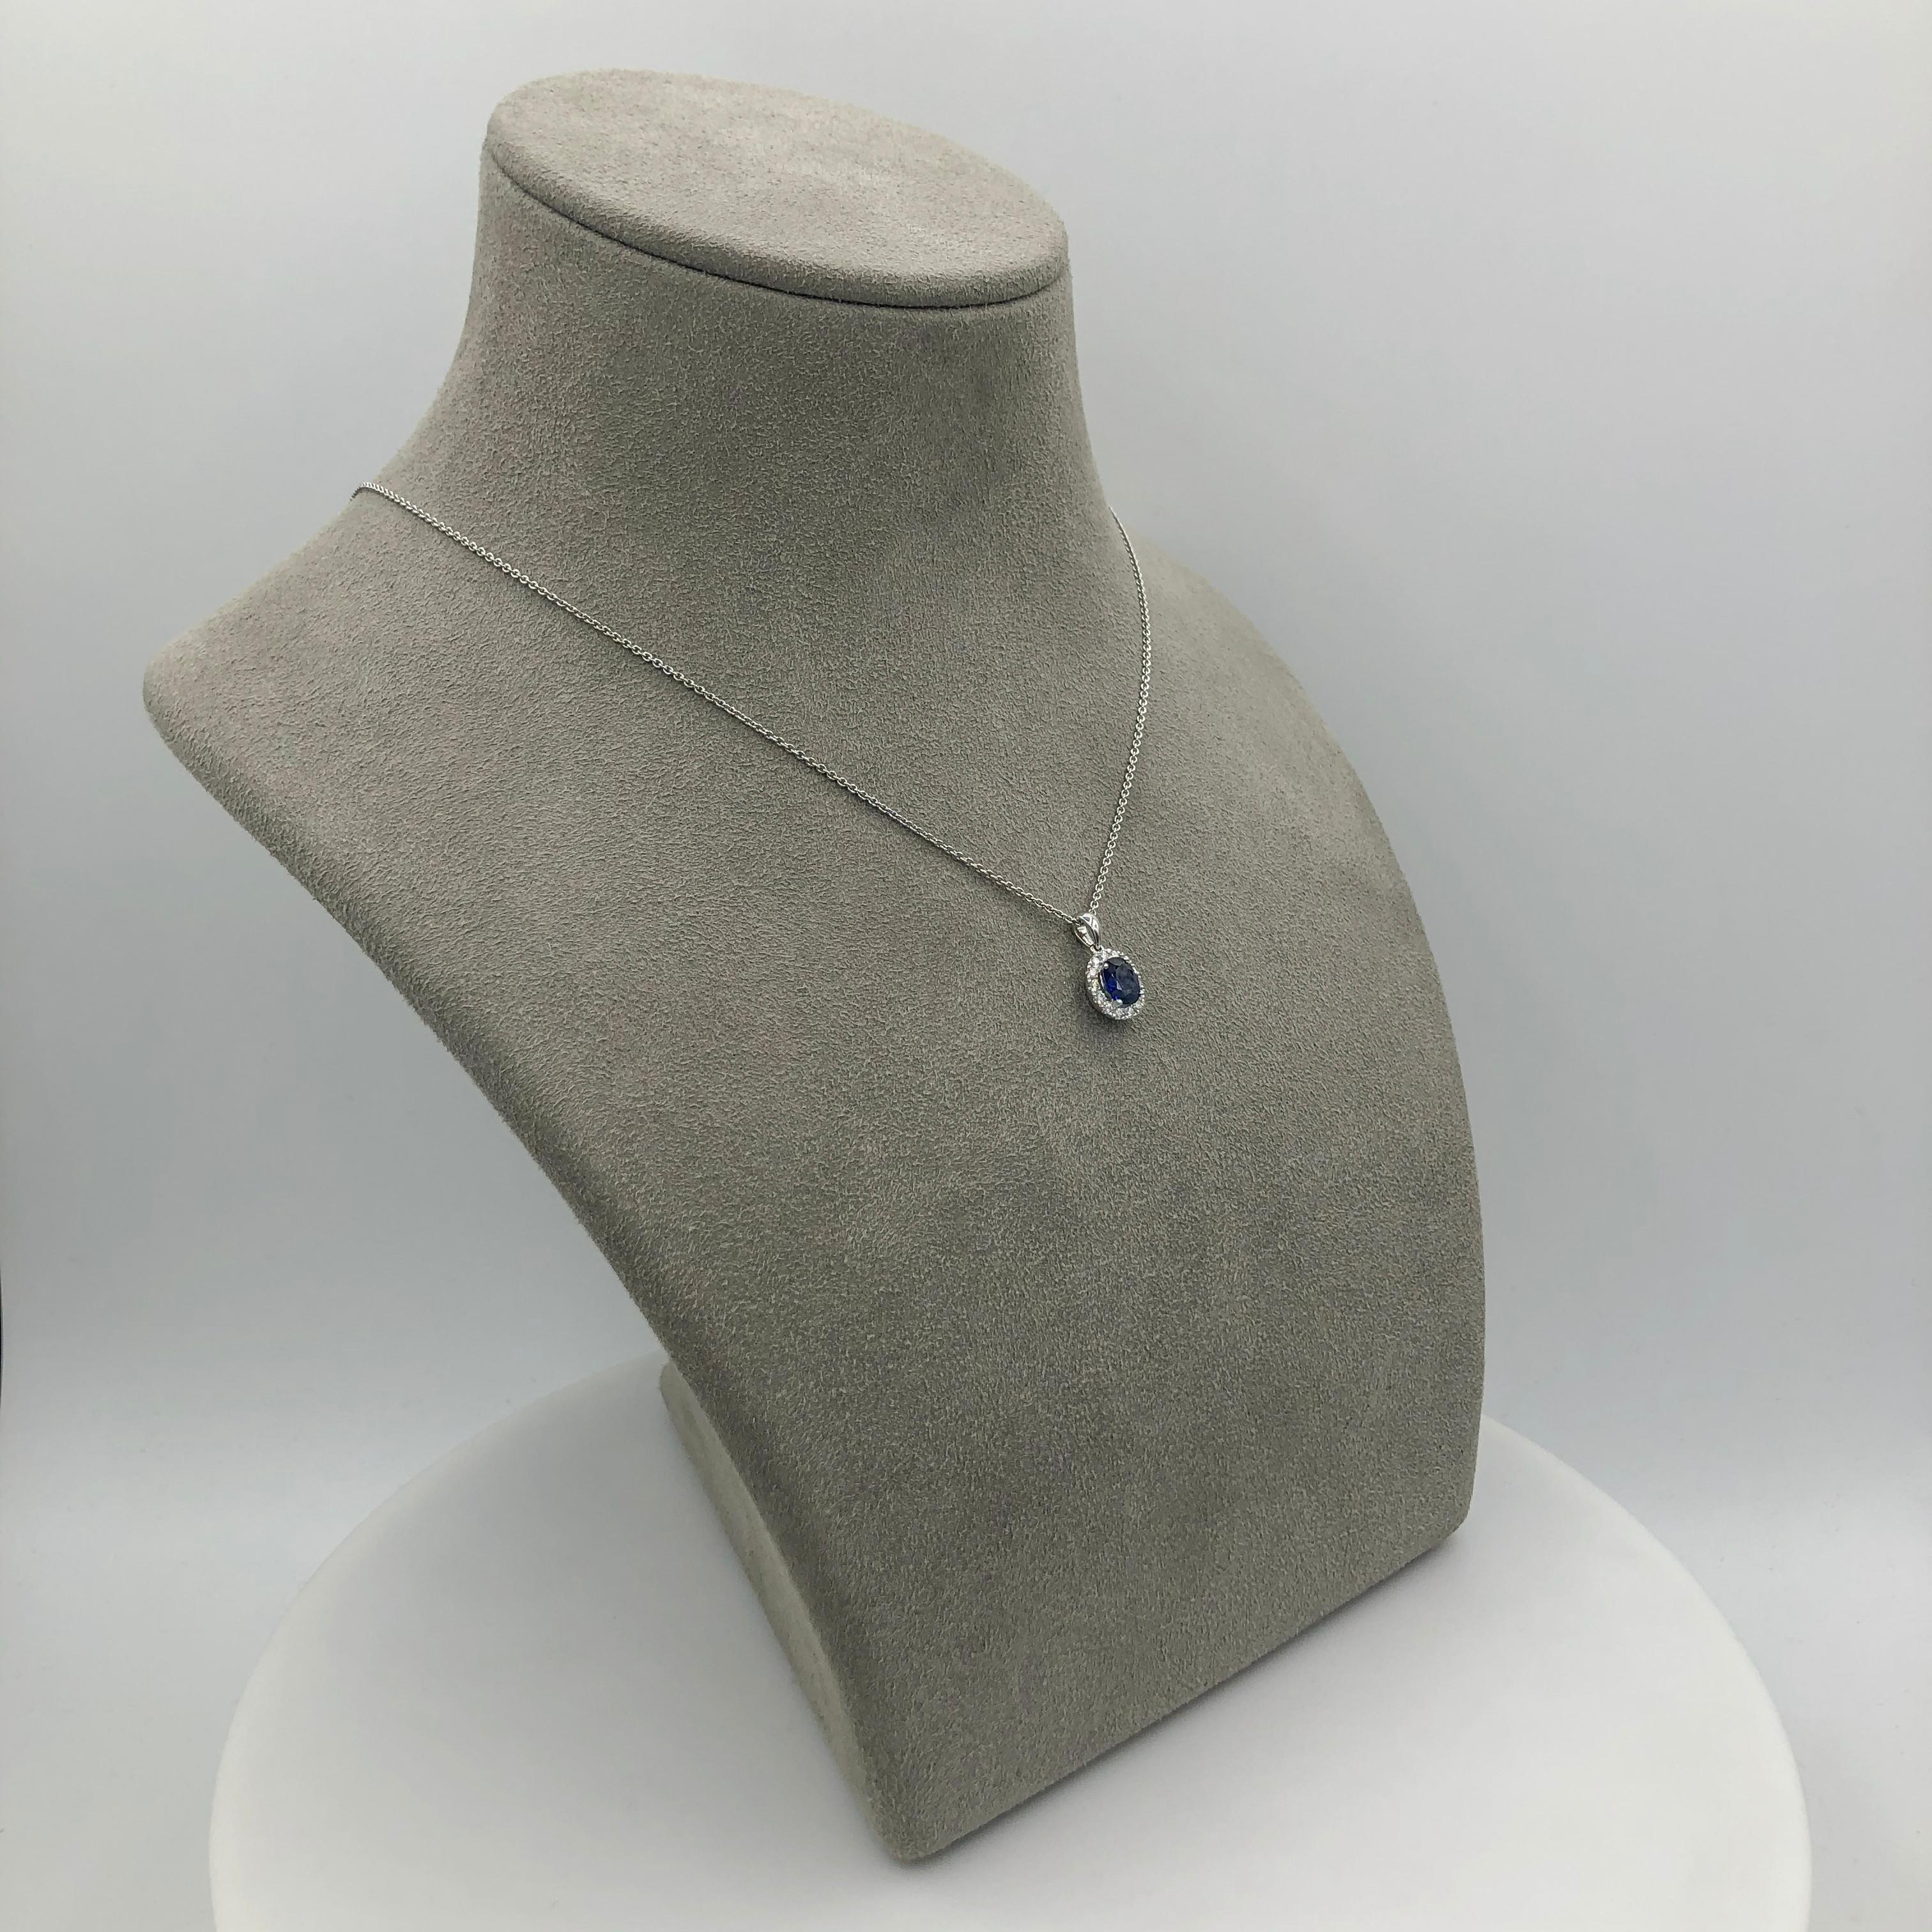 Oval Cut Roman Malakov 0.73 Carats Blue Sapphire with Diamond Halo Pendant Necklace For Sale